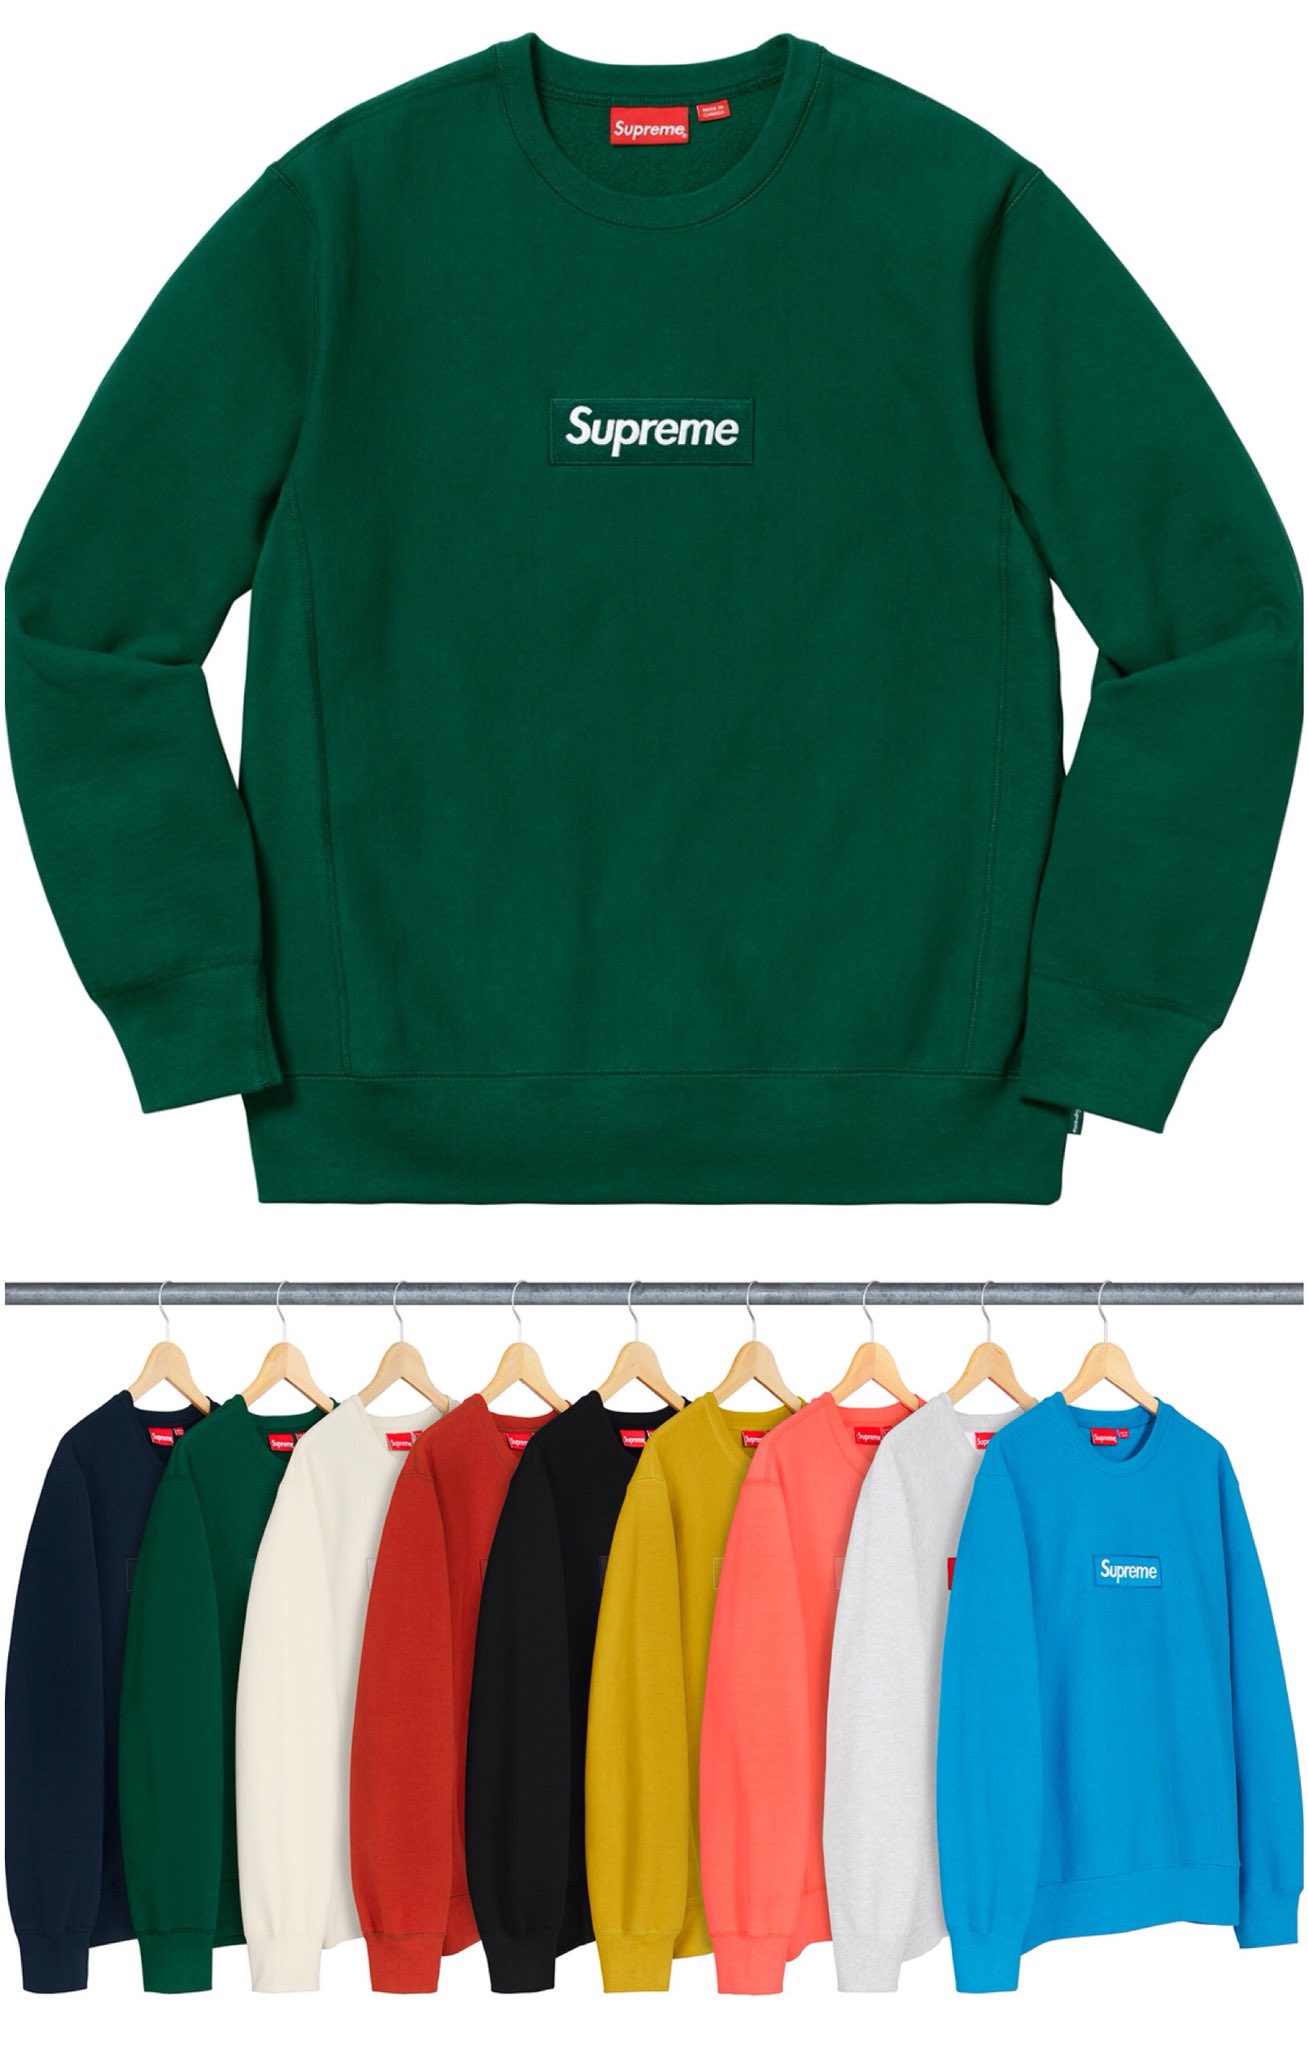 J on Twitter: "Supreme Box Logo Crewneck Sweatshirts Dropping This